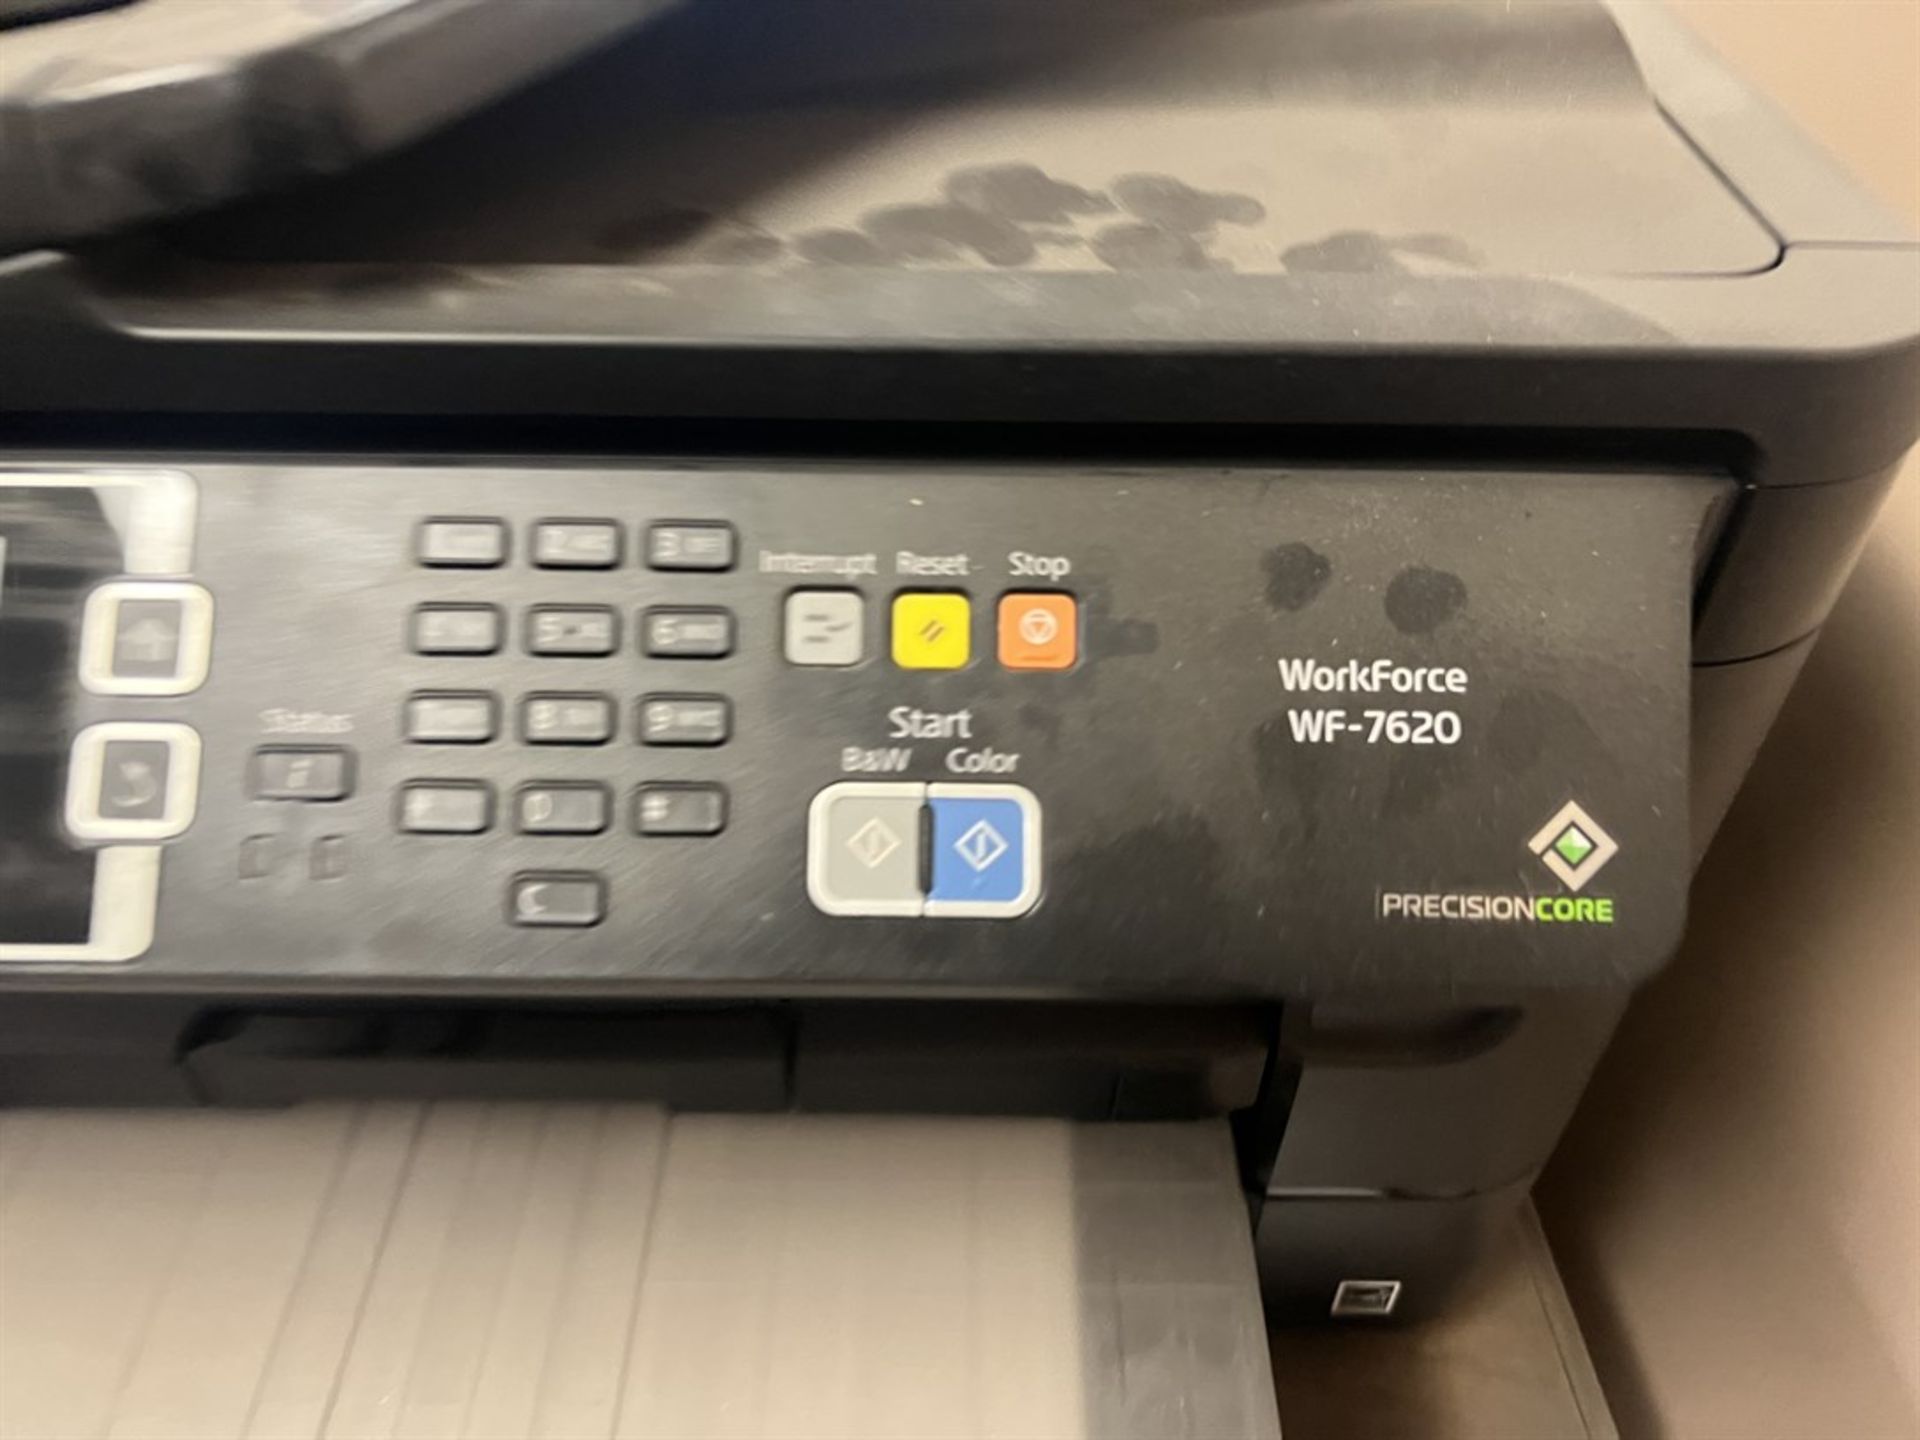 EPSON WF-7620 Workforce Printer - Image 3 of 4